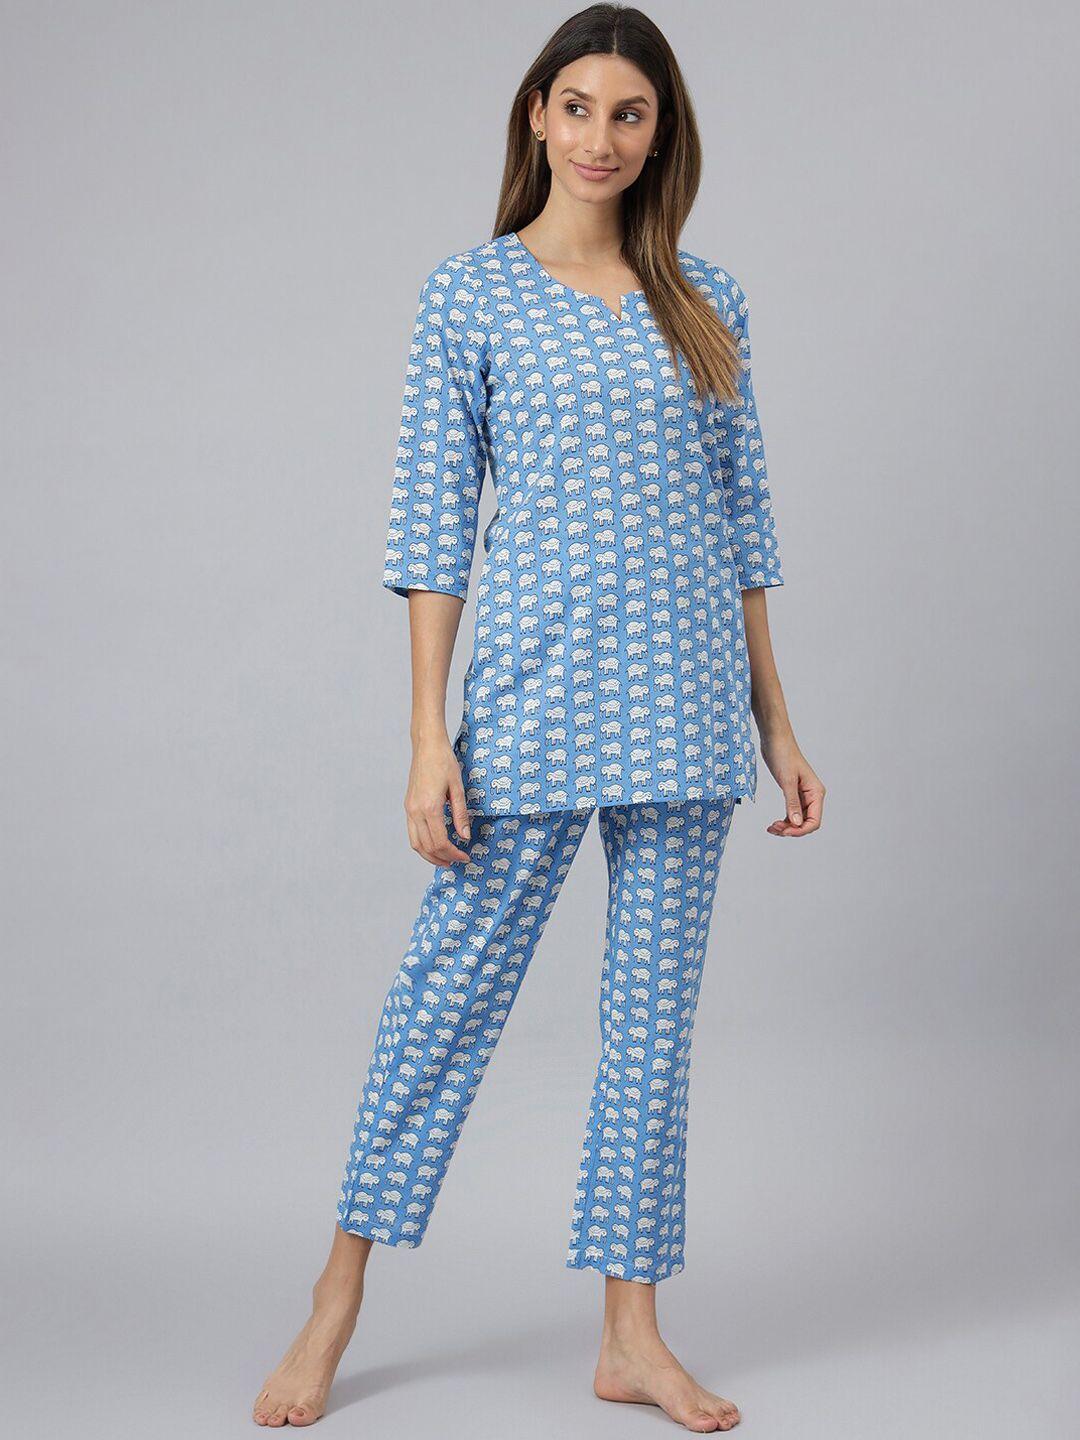 jaipur attire women blue & white printed cotton night suit-jans08-sky blue